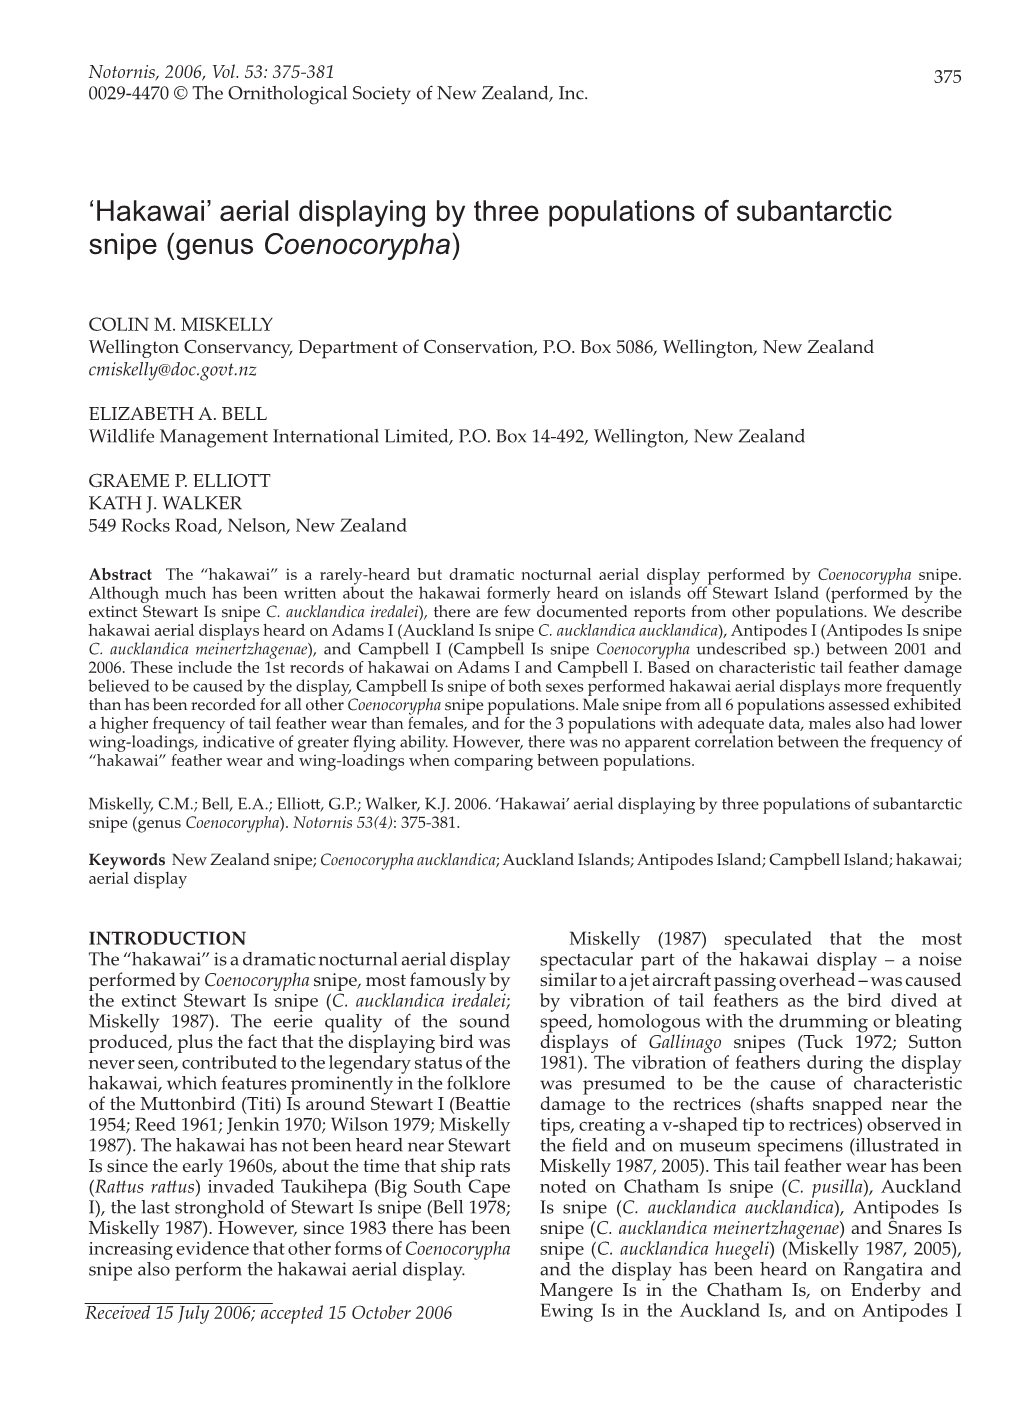 Hakawai’ Aerial Displaying by Three Populations of Subantarctic Snipe (Genus Coenocorypha)